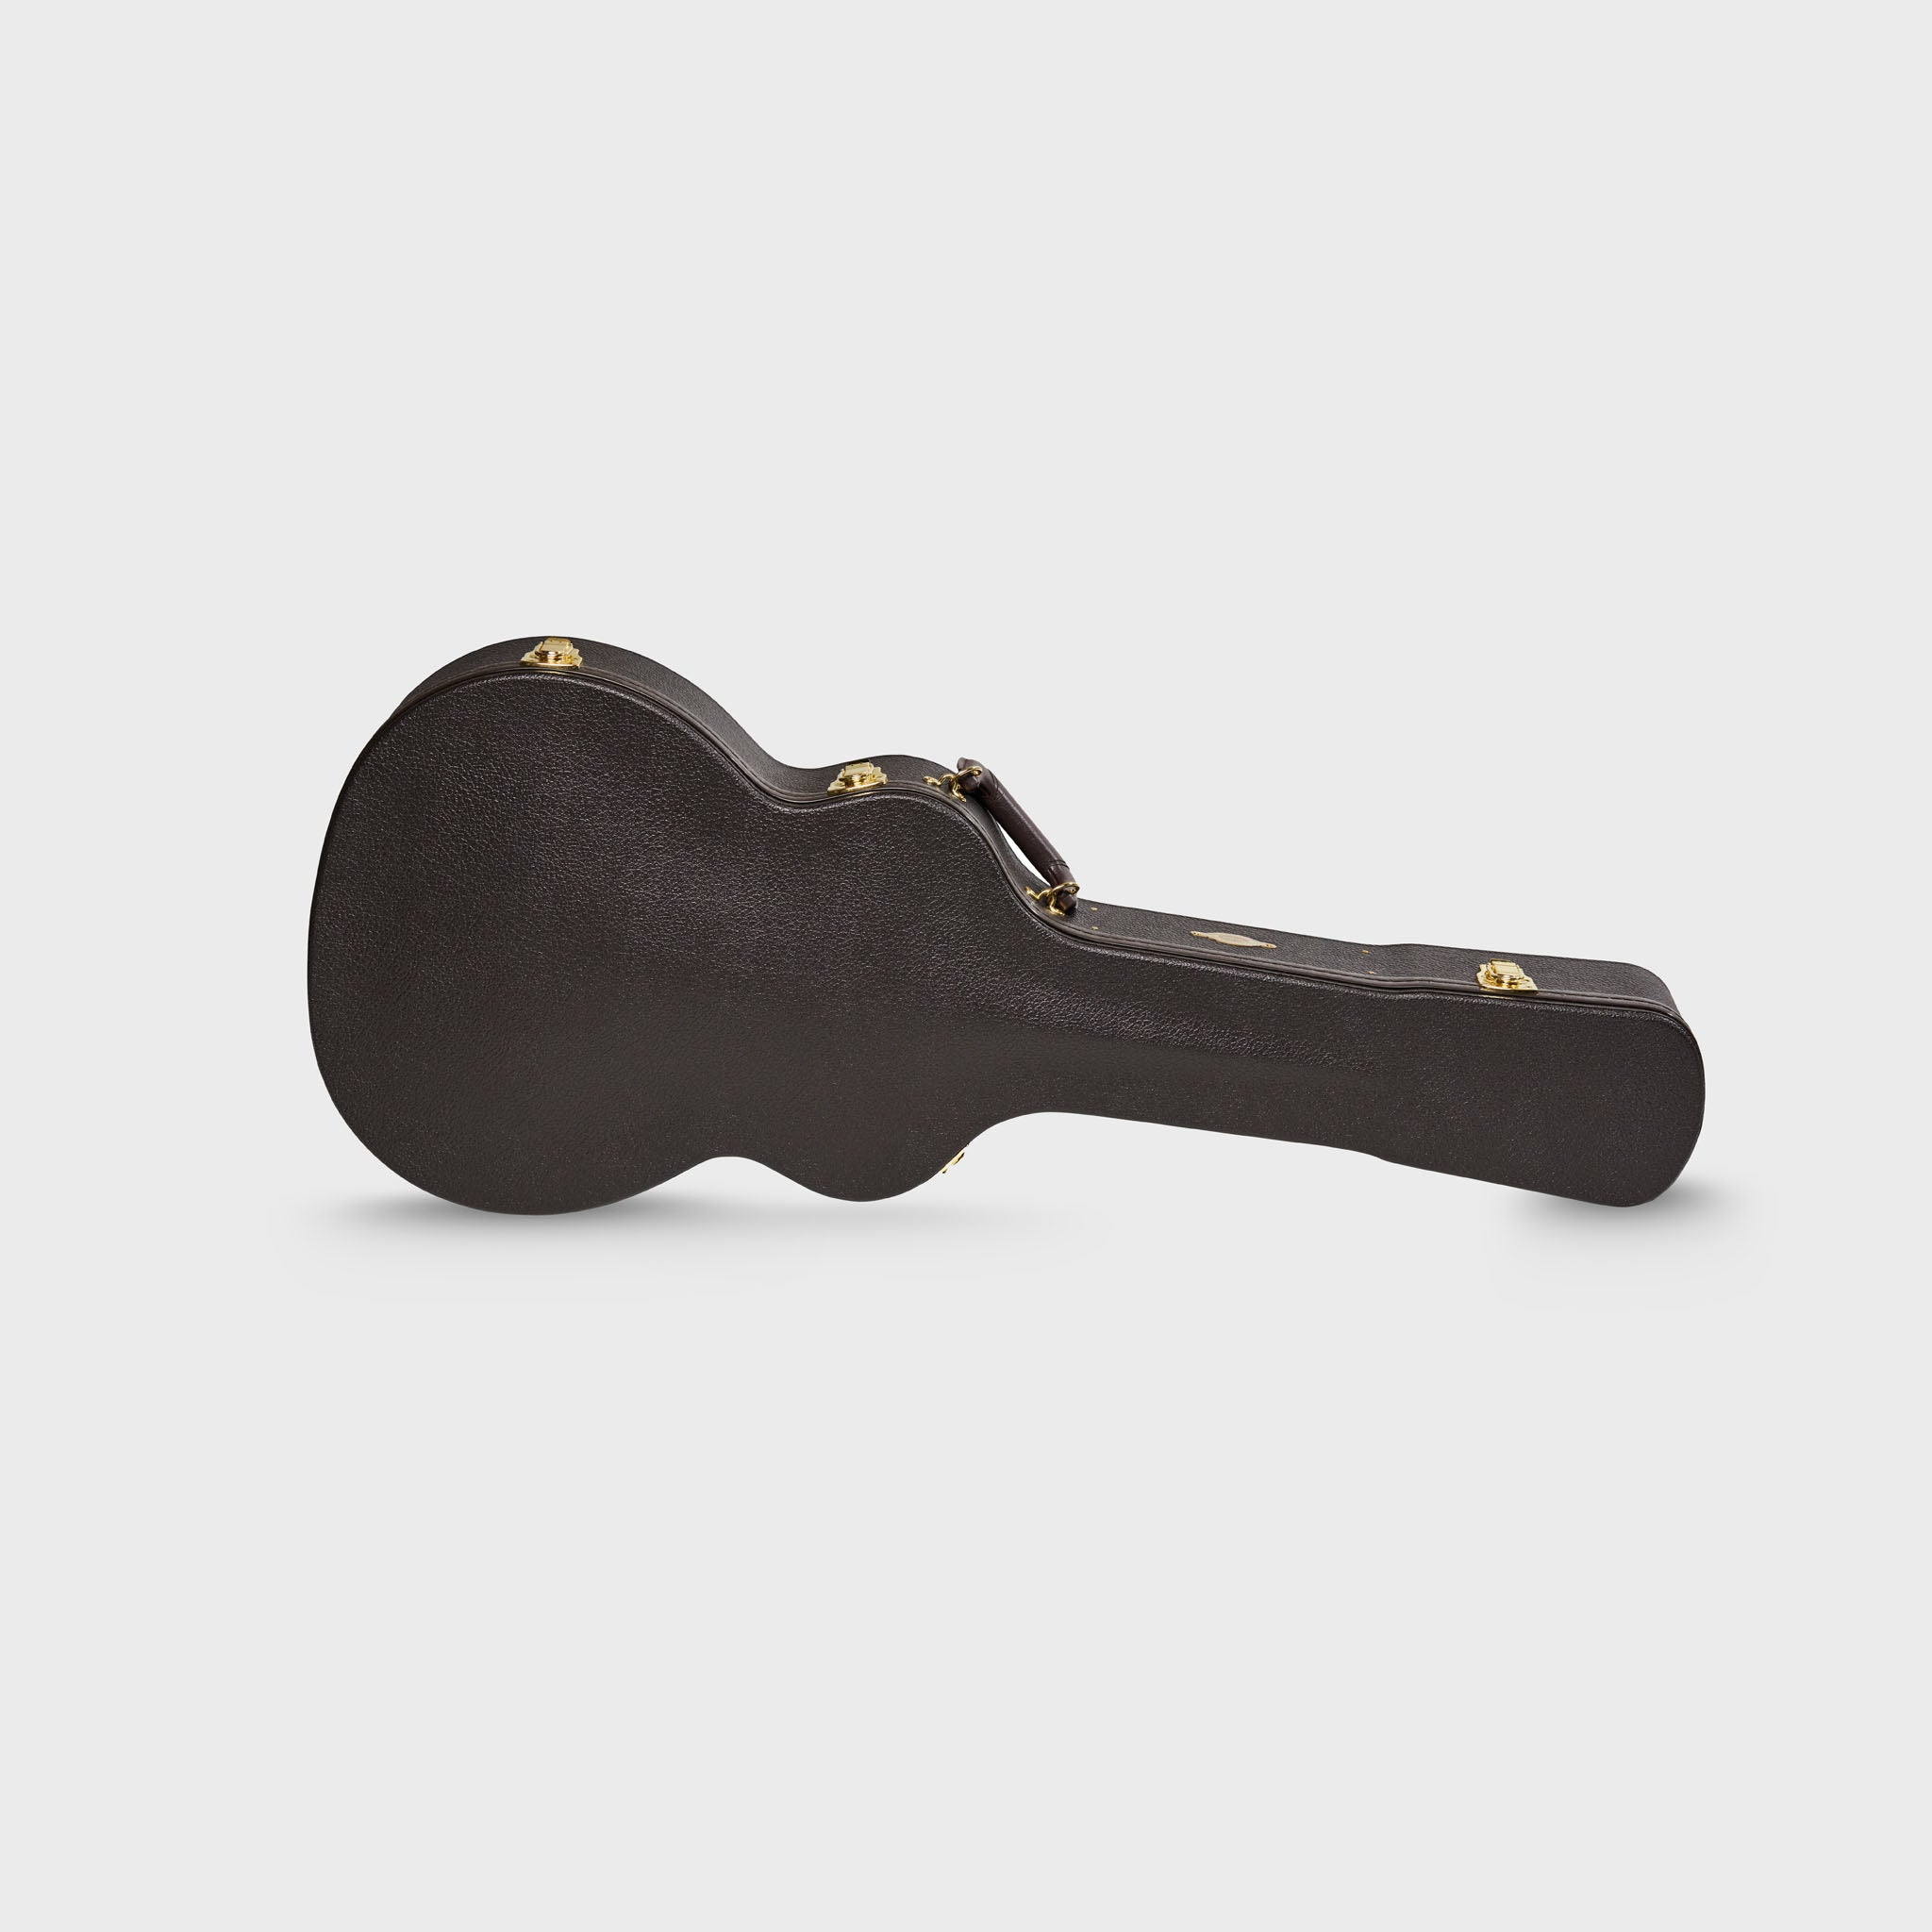 Taylor 214ce-K DLX Layered Koa Acoustic-Electric Guitar